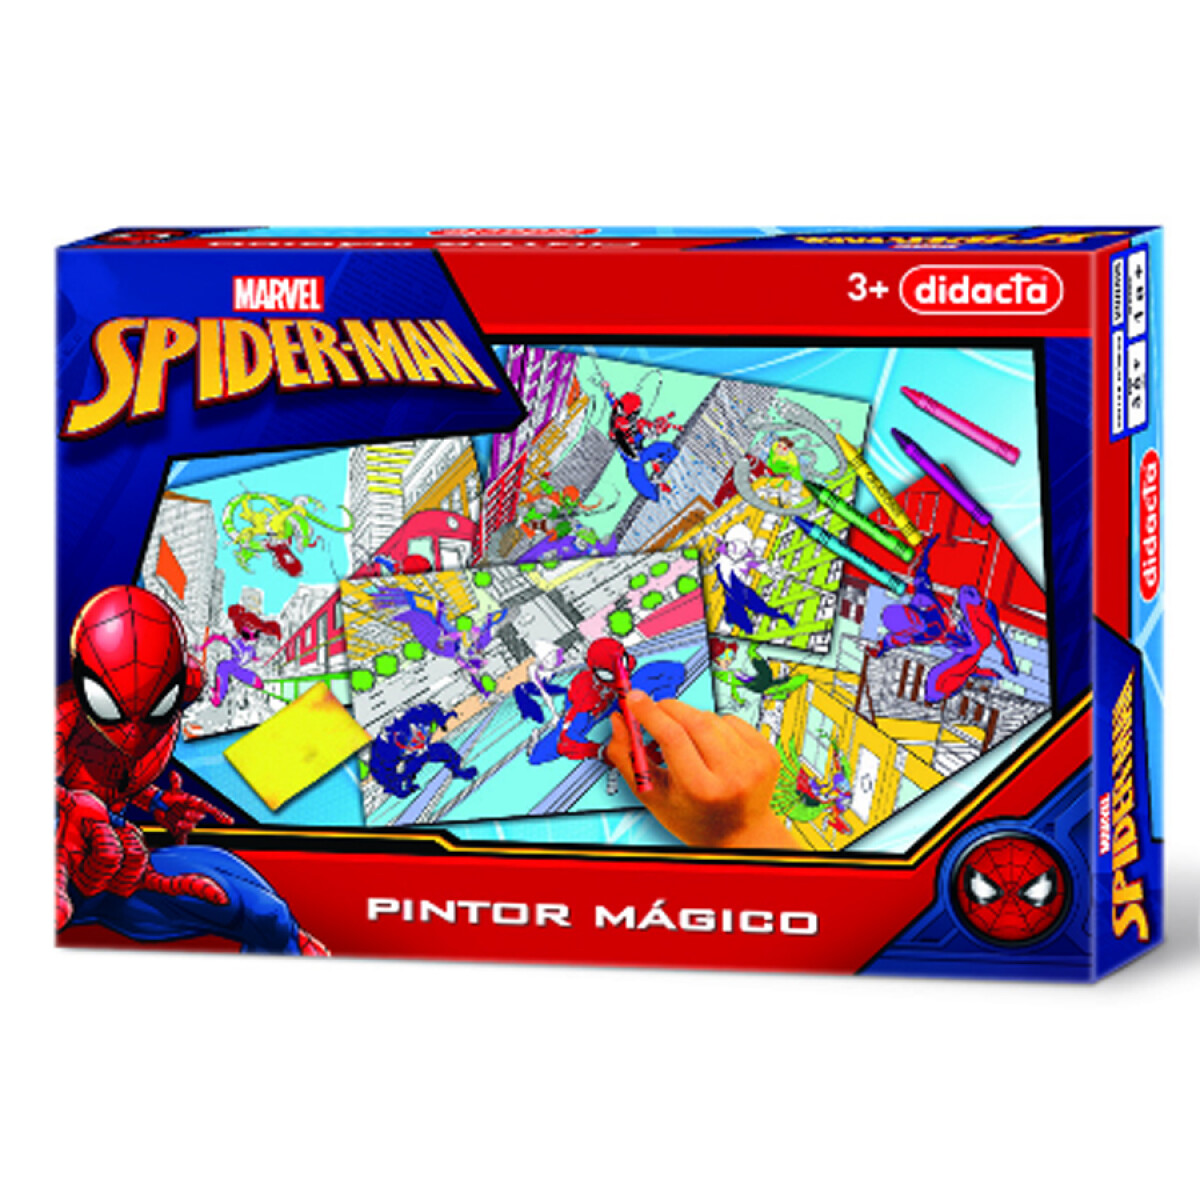 Pintor MÁgico Spiderman Didacta - 001 